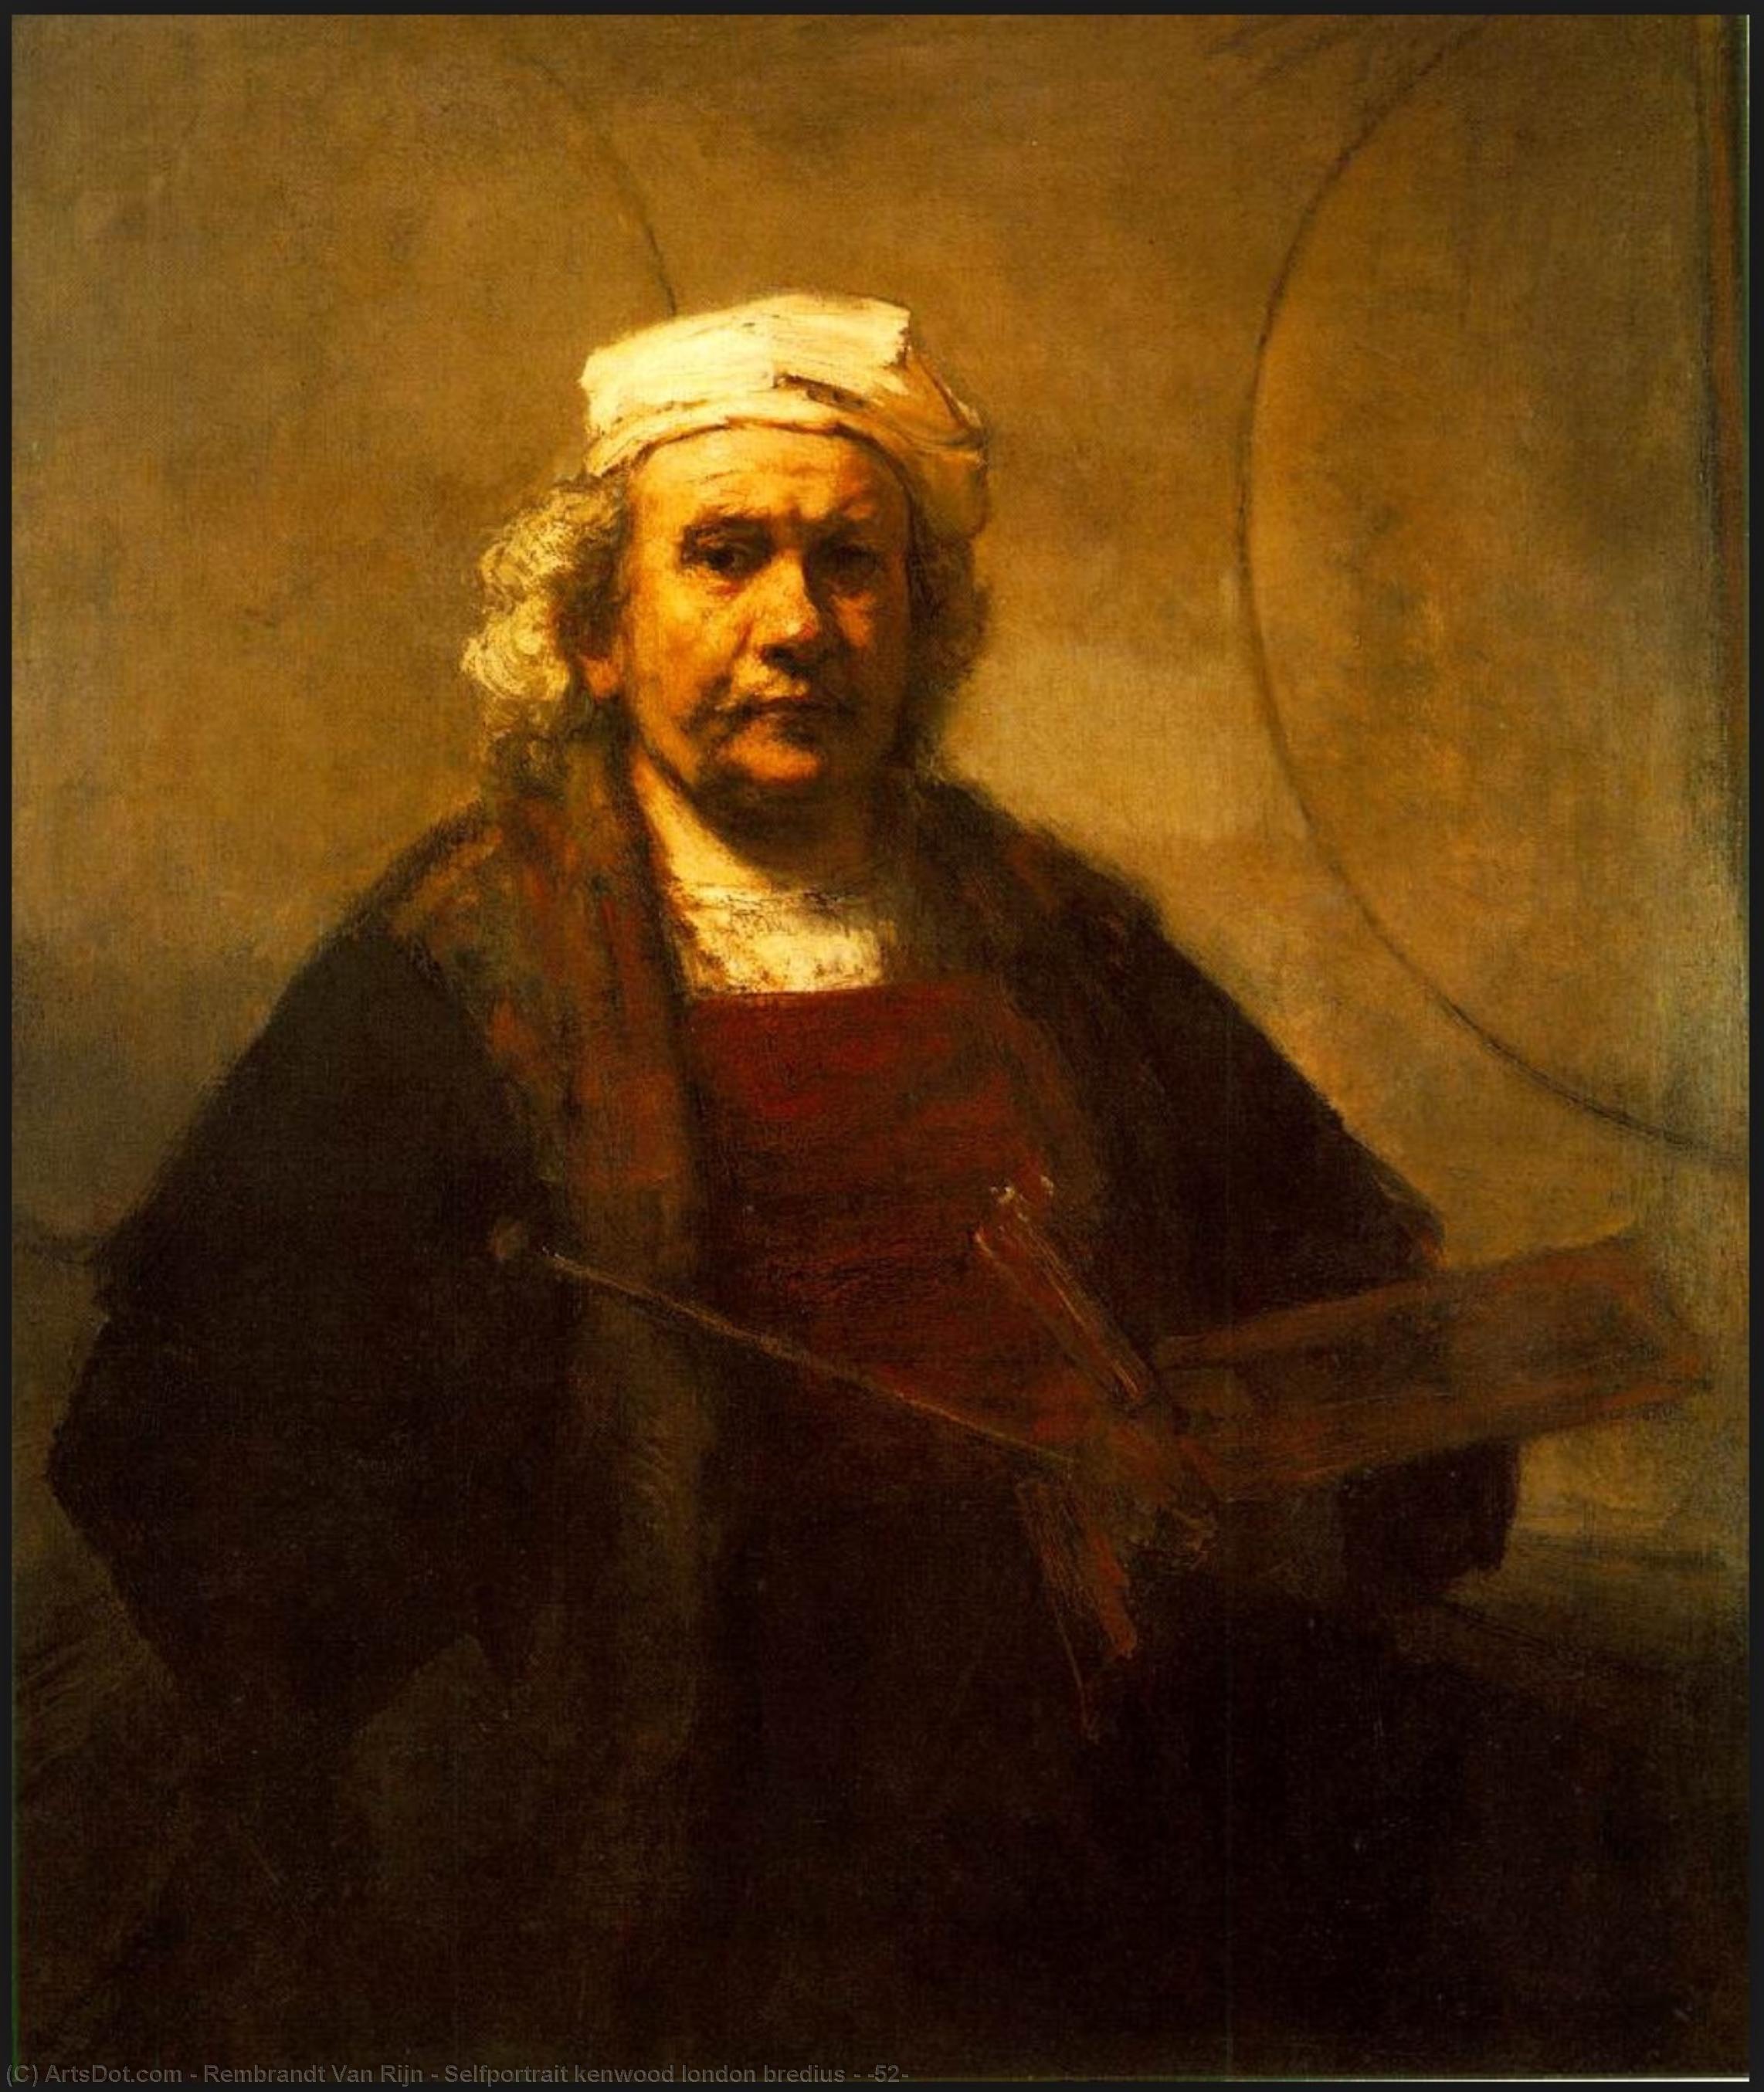 WikiOO.org - אנציקלופדיה לאמנויות יפות - ציור, יצירות אמנות Rembrandt Van Rijn - Selfportrait kenwood london bredius - (52)